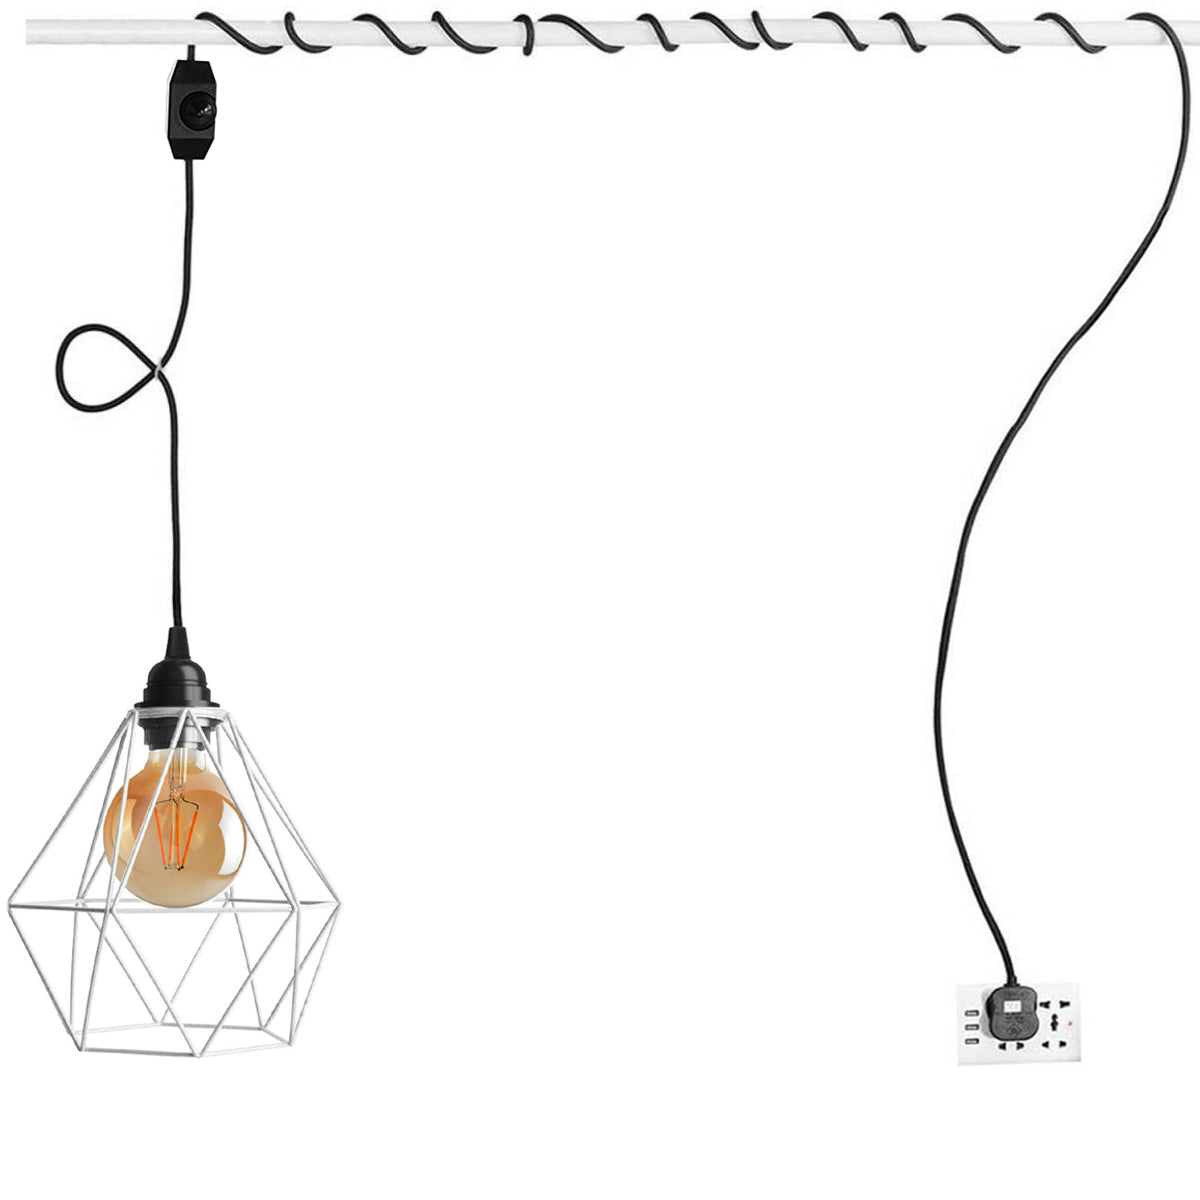 4m Black Dimmer Switch Plug In Pendant Lamp Light With White Cage~1869 - LEDSone UK Ltd